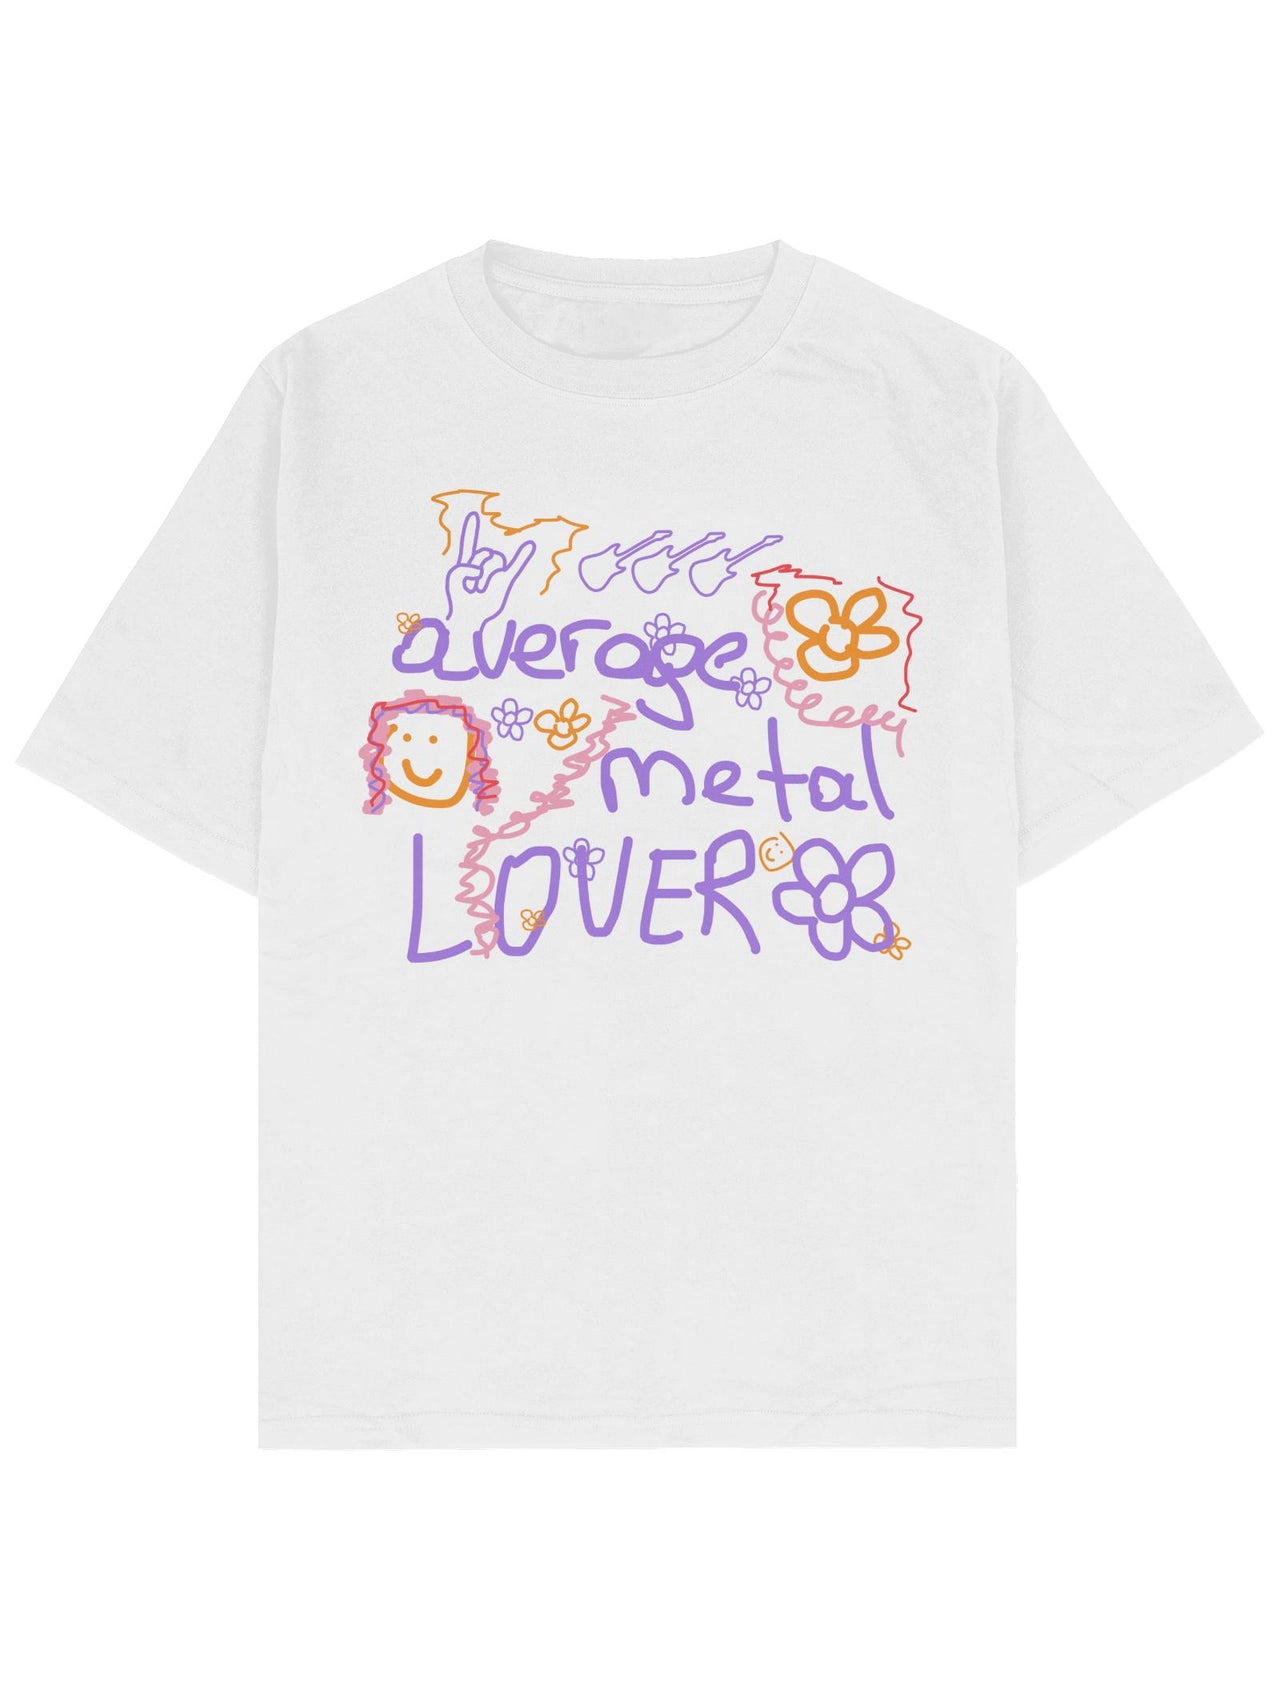 Average Metal Lover Oversize Tee - L White